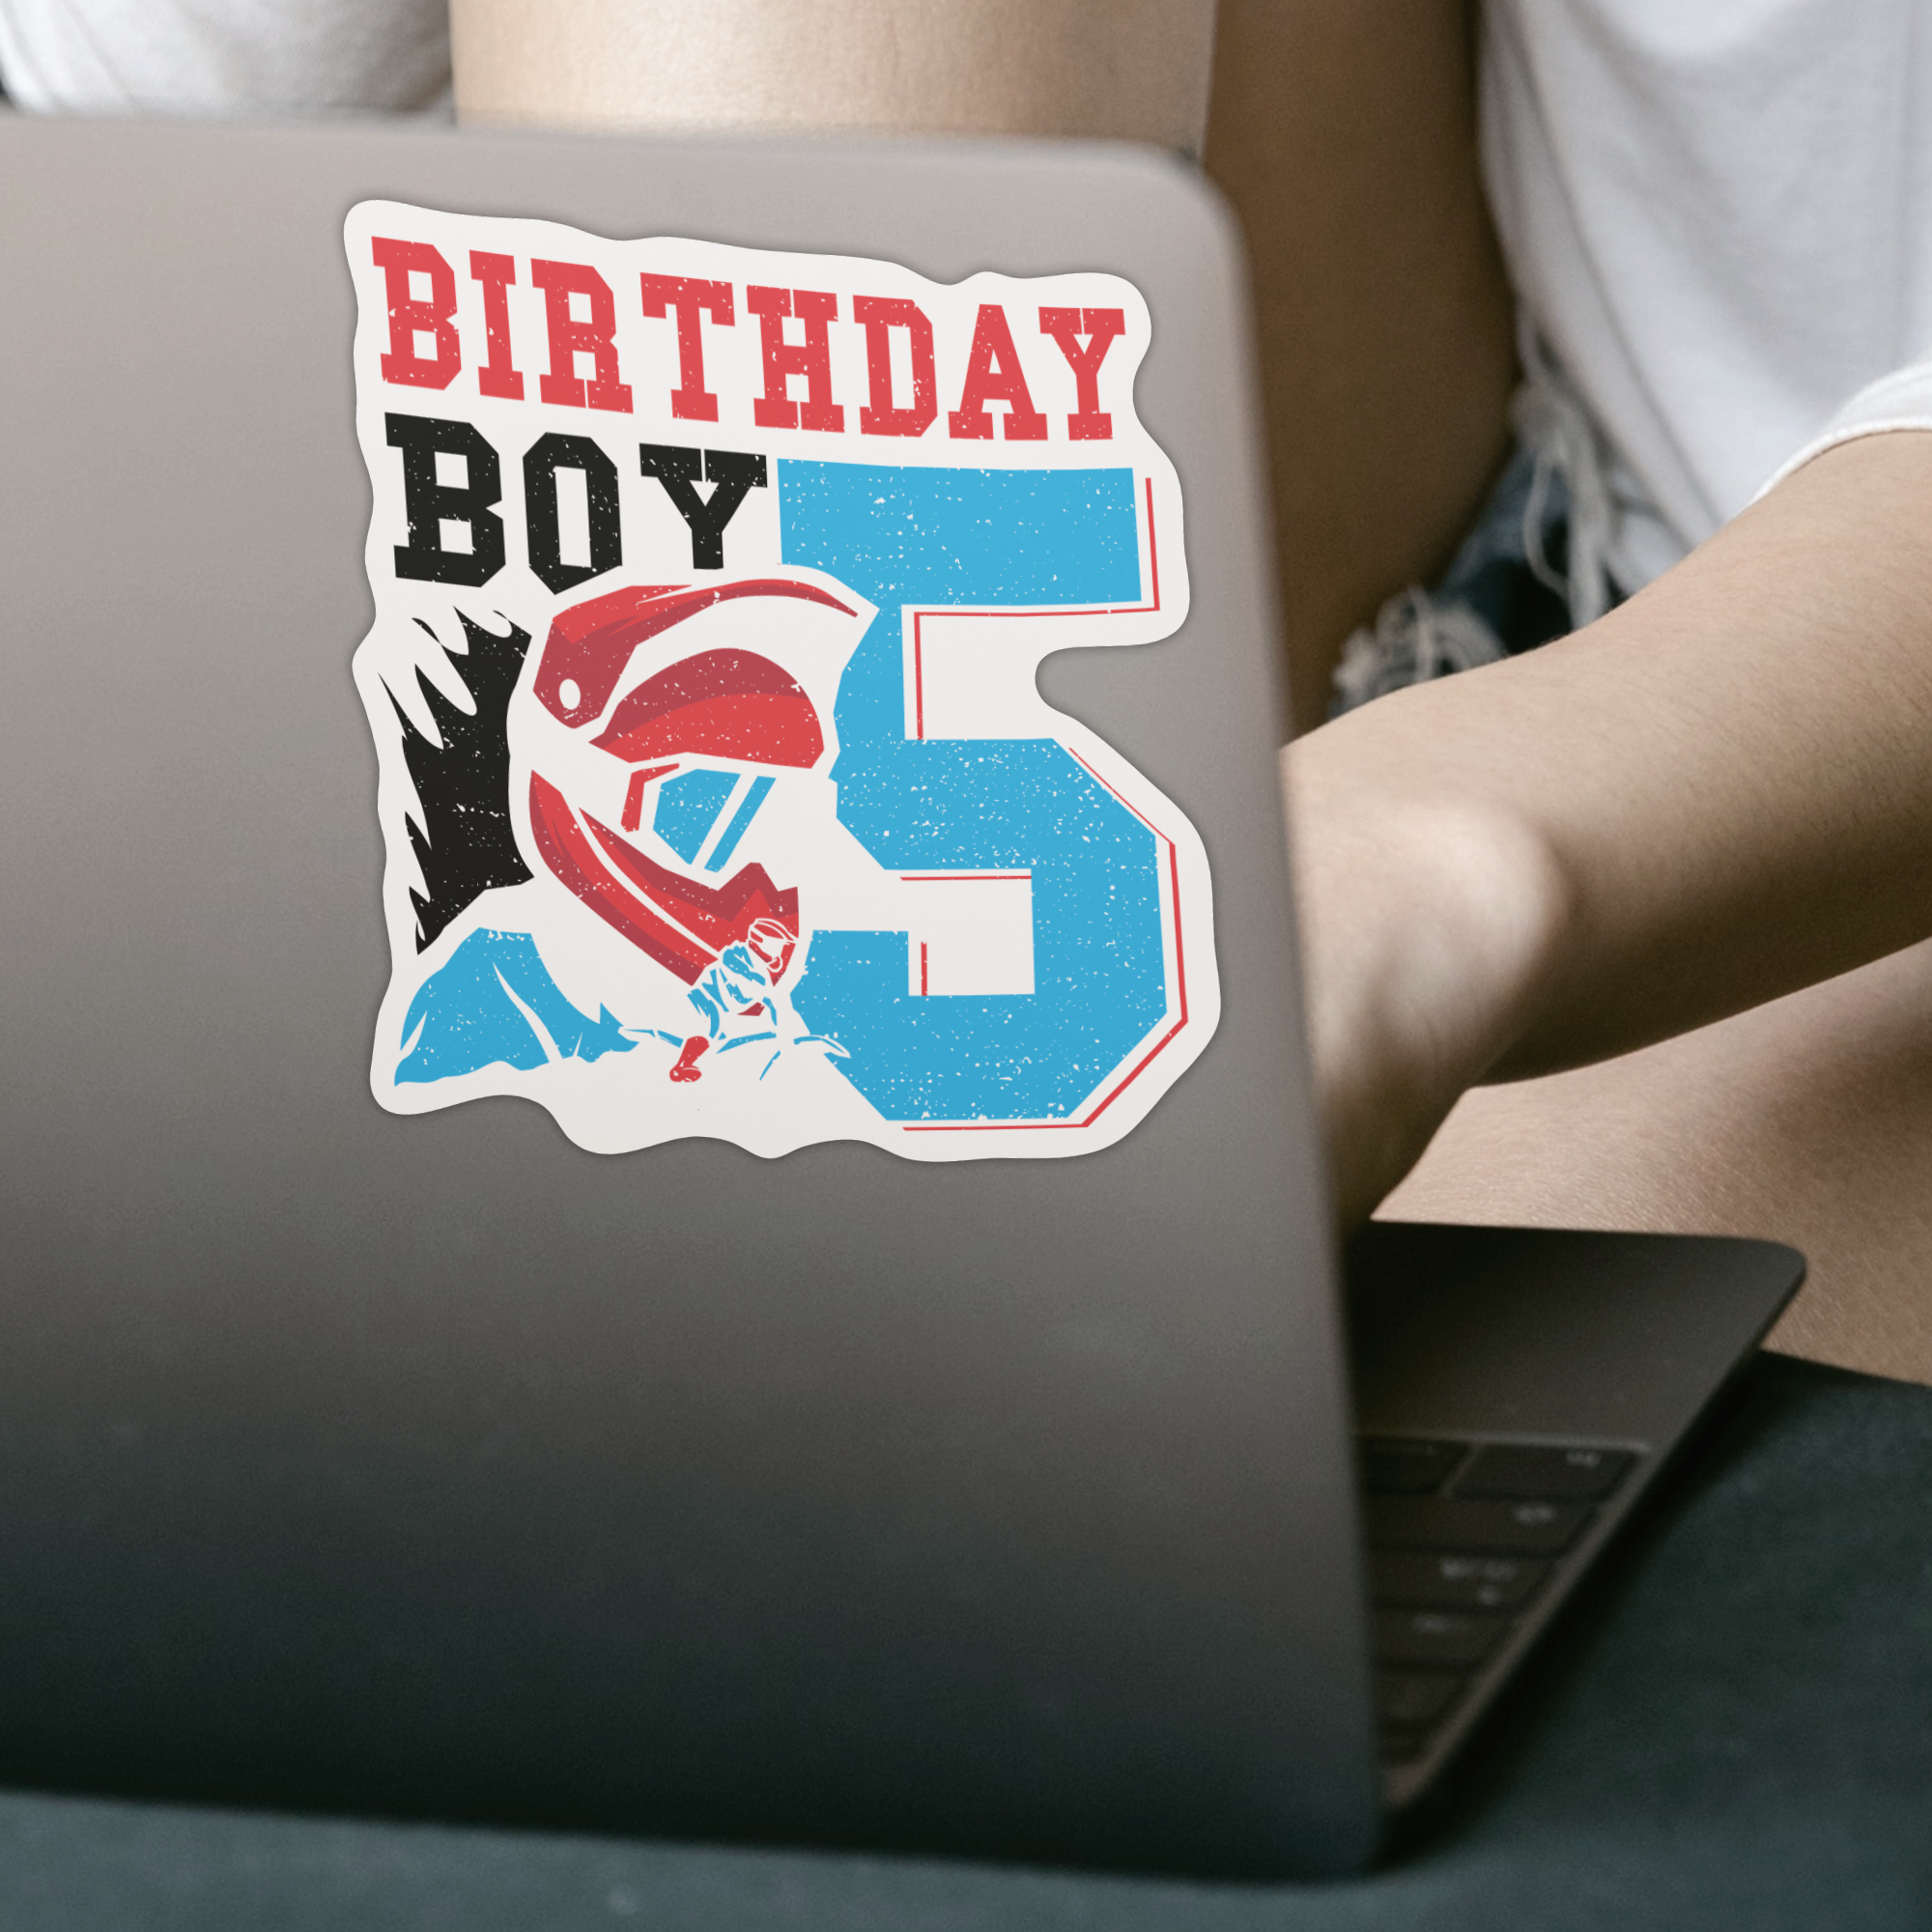 Birthday Boy 5 Sticker - DESIGNSBYJNK5.COM